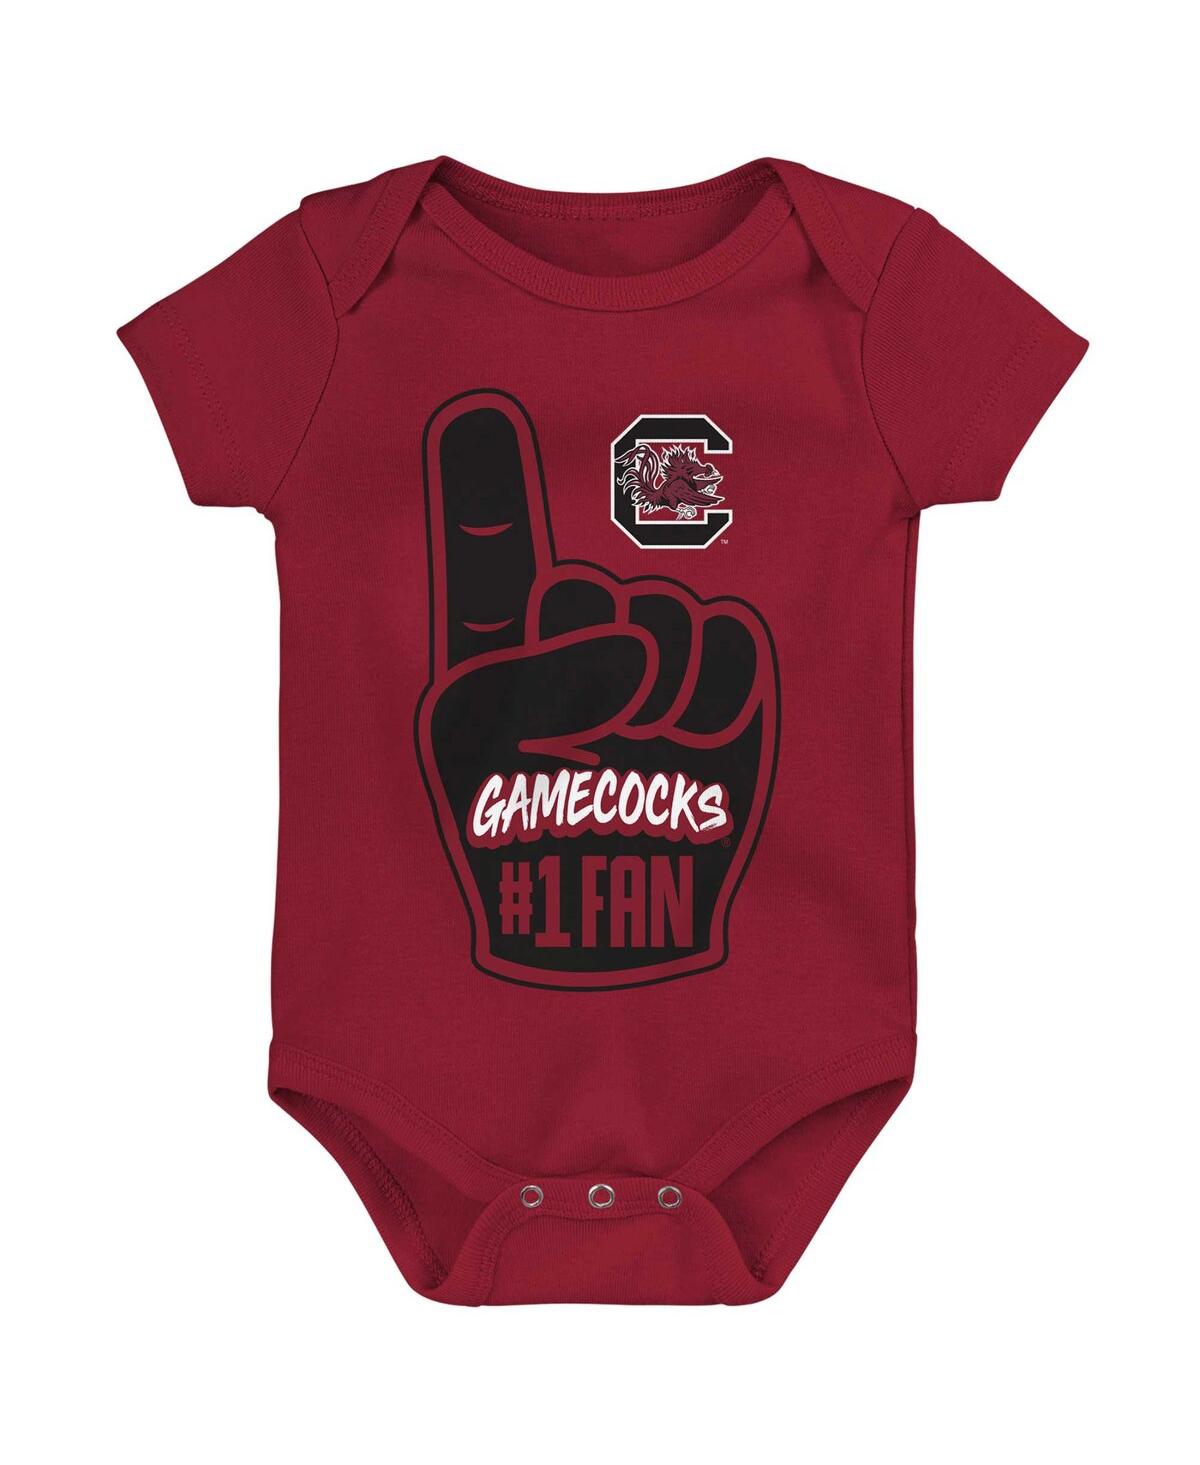 Outerstuff Babies' Newborn And Infant Boys And Girls Garnet South Carolina Gamecocks #1 Fan Foam Finger Bodysuit